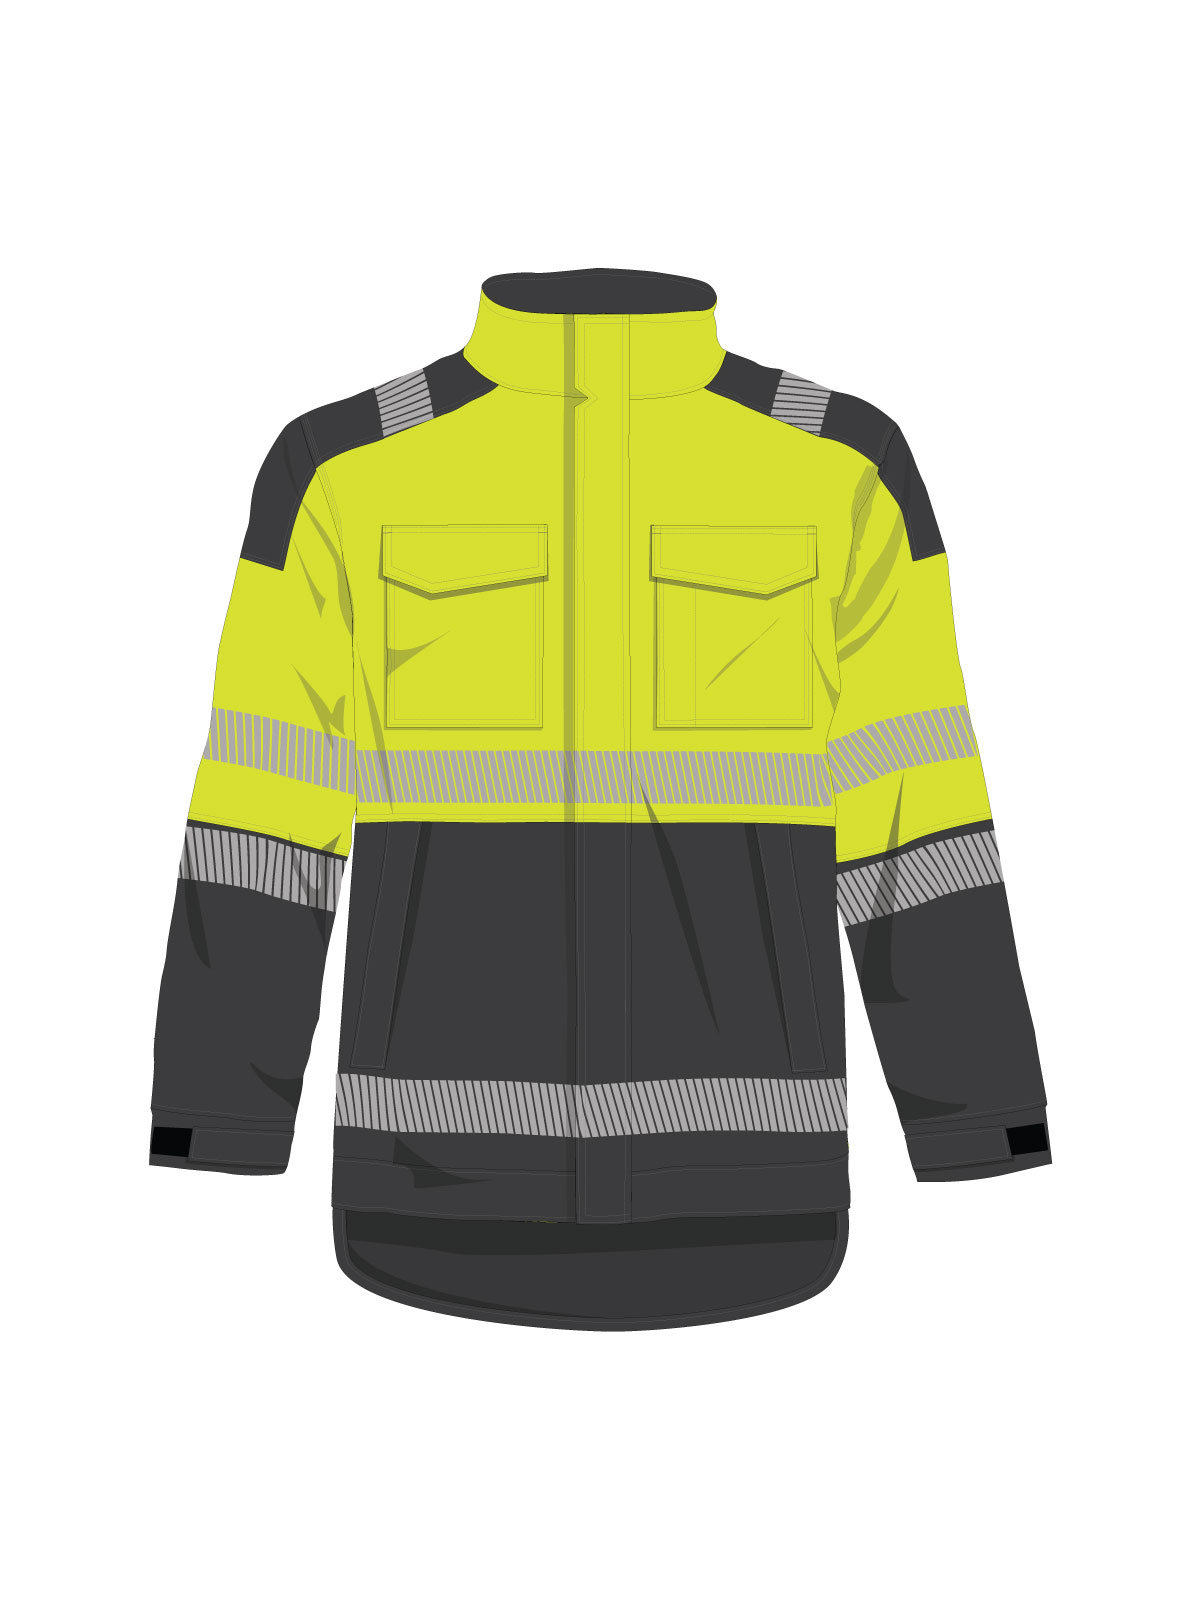 Limelite Flame Resistant Jacket